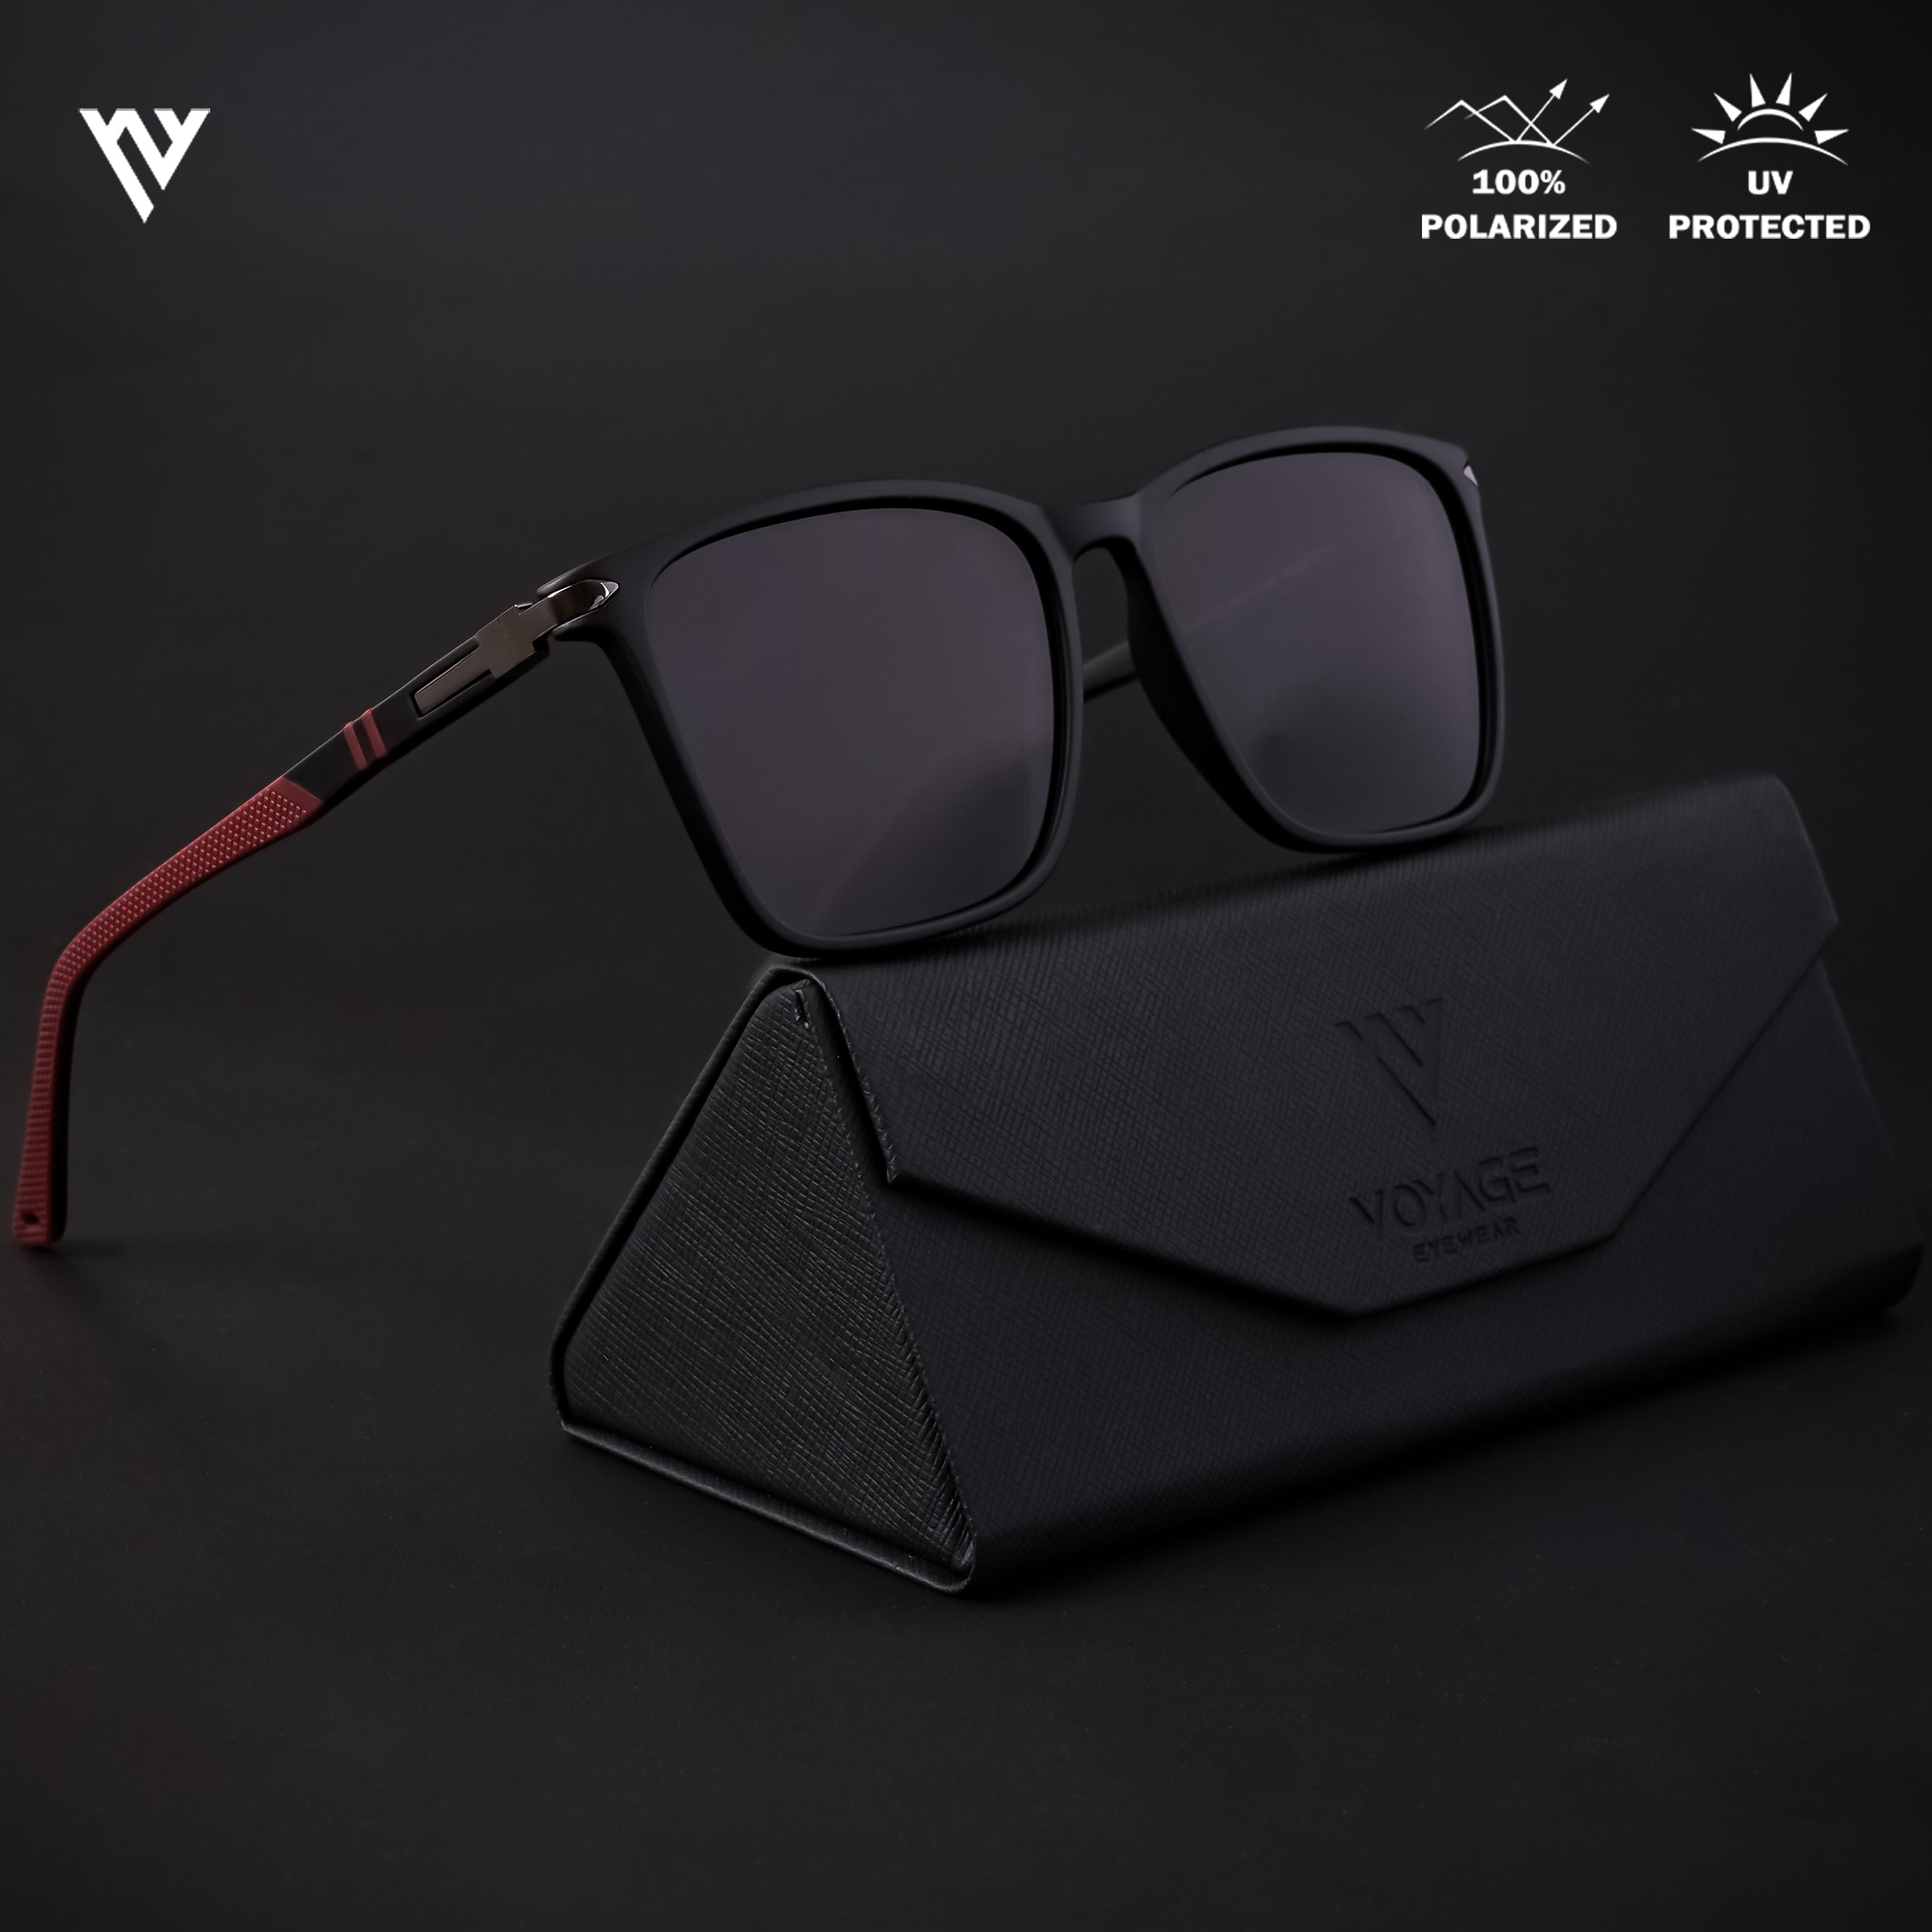 Voyage Exclusive Matt Black Polarized Wayfarer Sunglasses for Men & Women - PMG4486